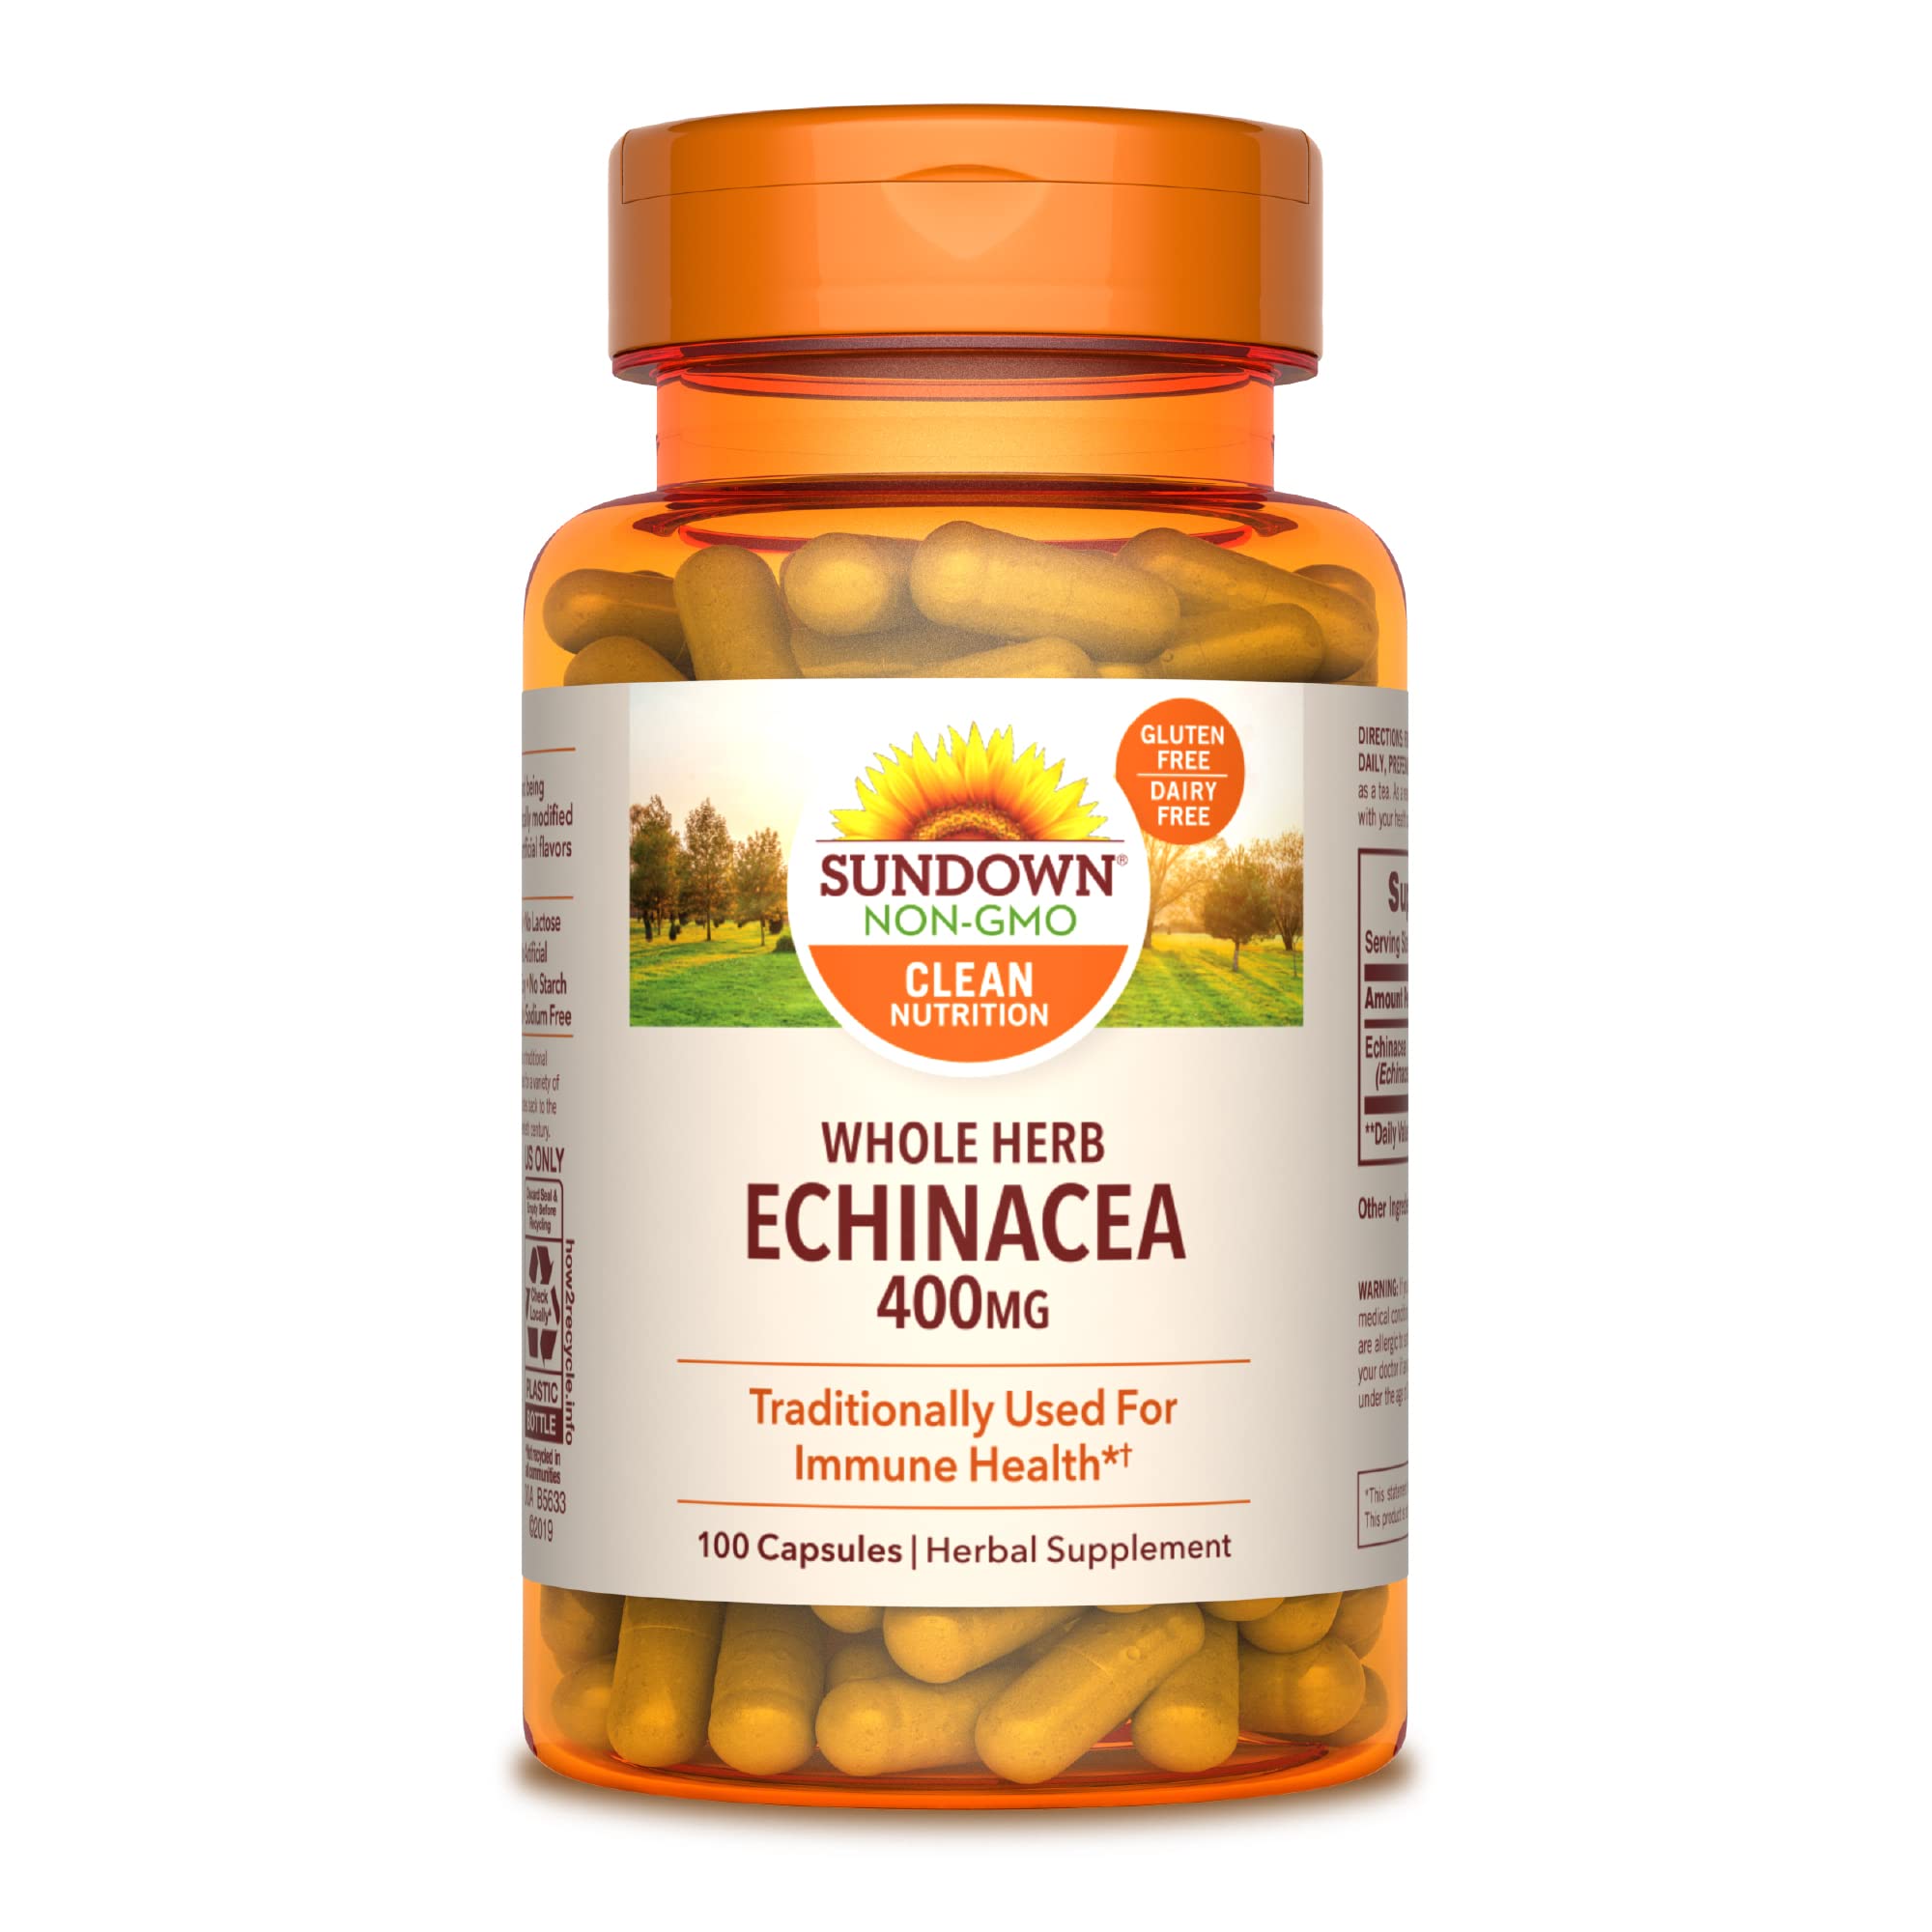 Sundown Echinacea Herbal Supplement 400mg Capsules for Immune Support, Non-GMO, Gluten-Free, Dairy-Free, 100 Count